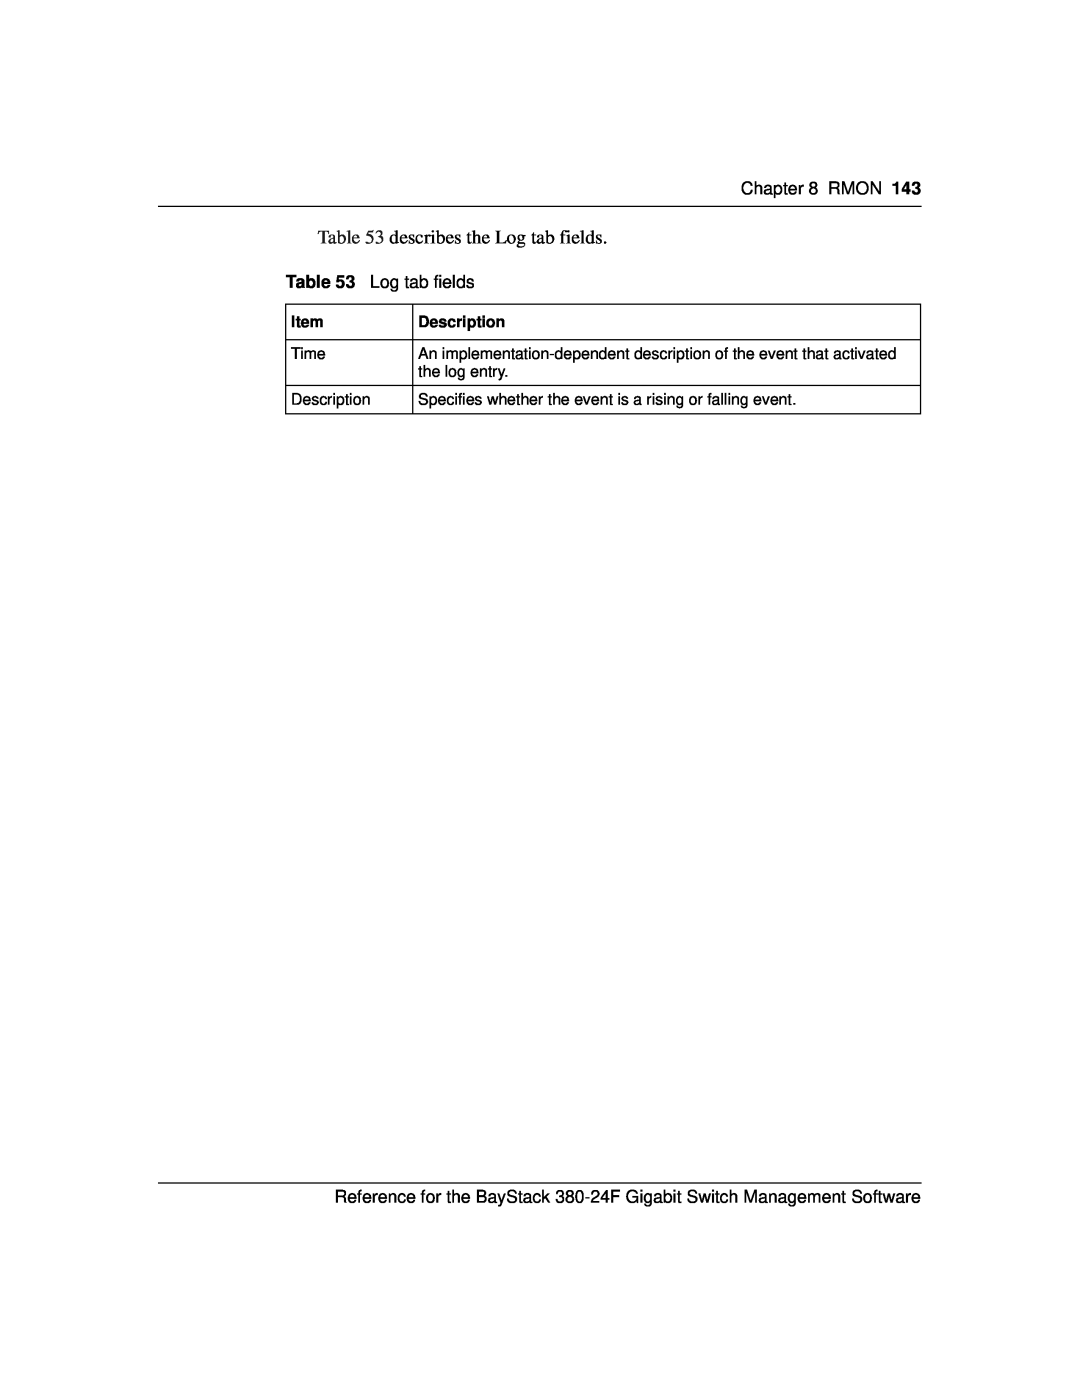 Nortel Networks 214393-A manual describes the Log tab fields, Rmon, Description 